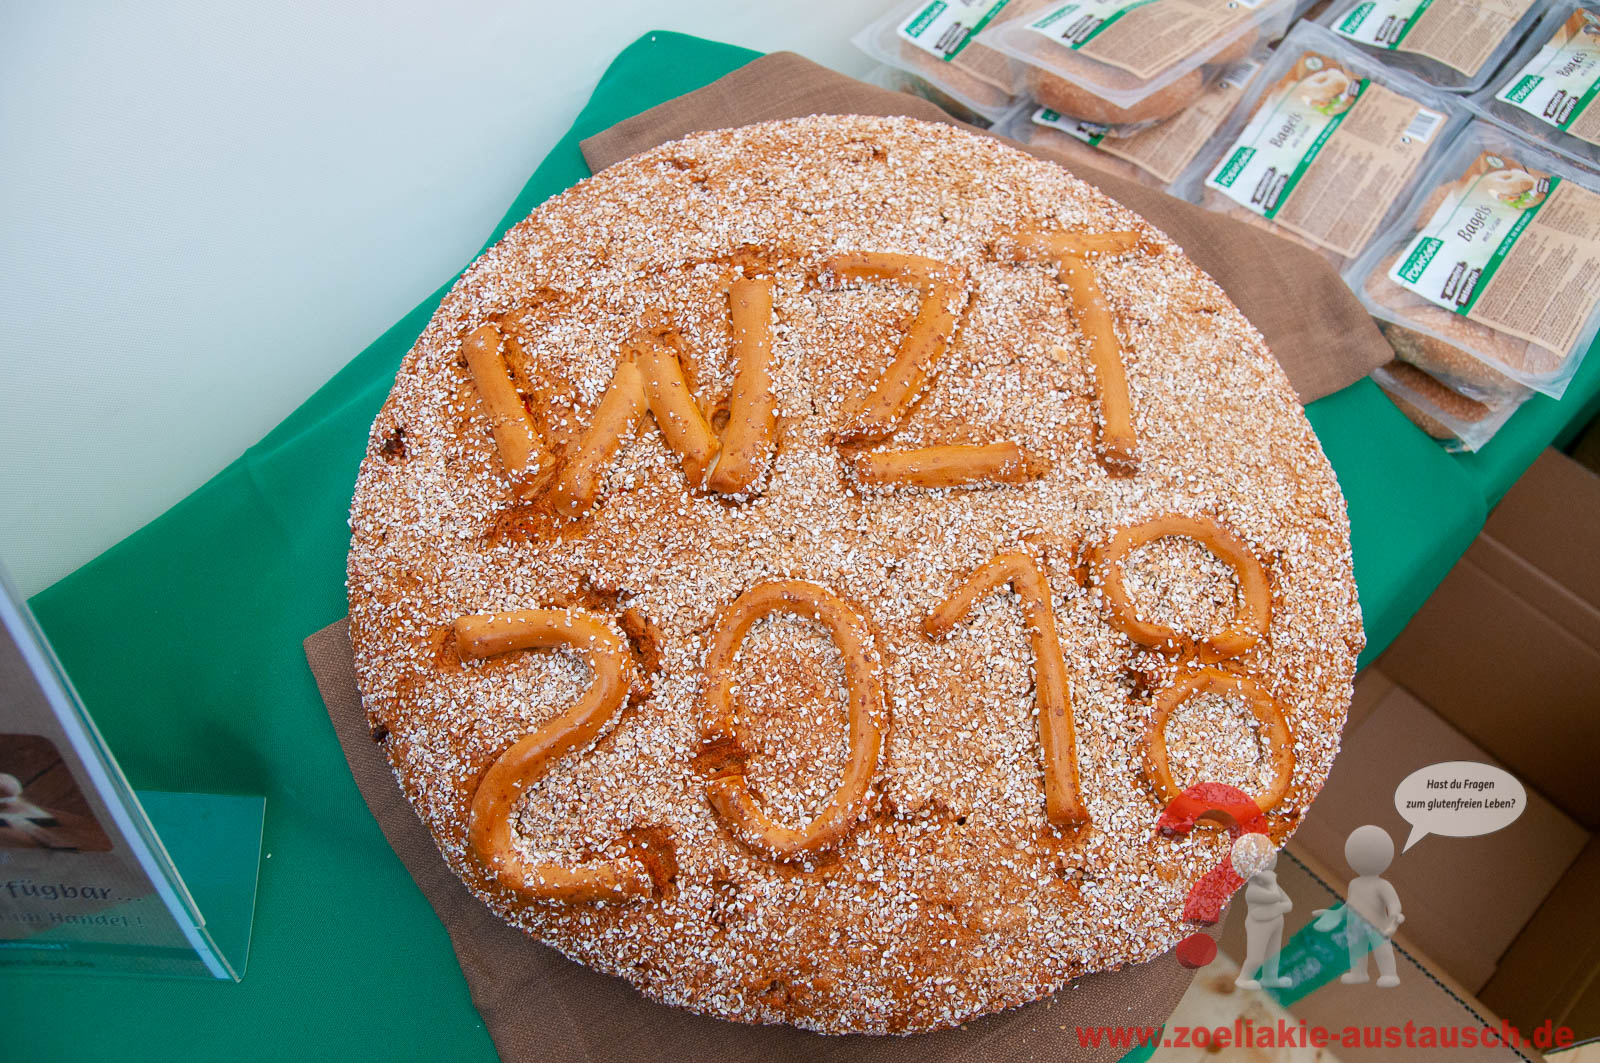 WZT_2018_Zoeliakie-Austausch-20180519_090